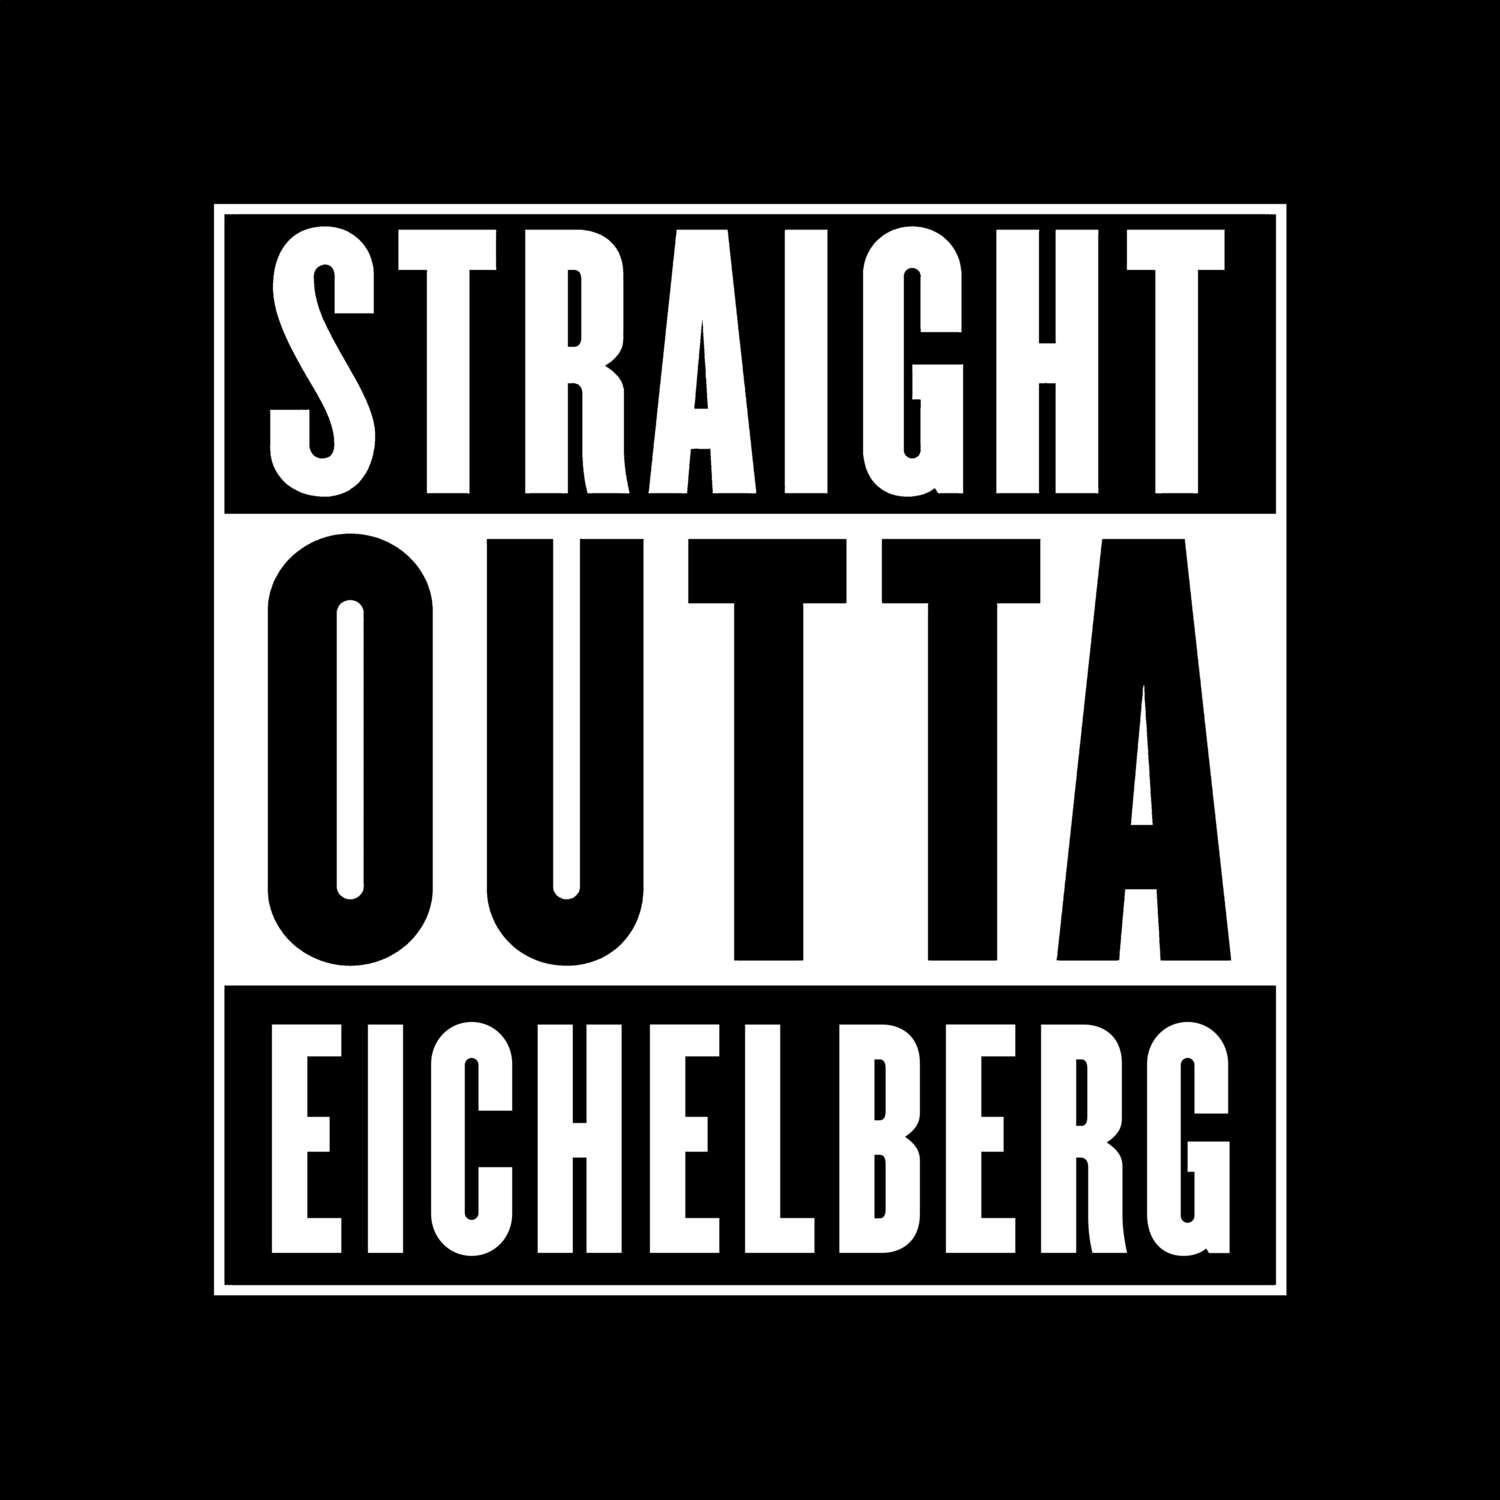 Eichelberg T-Shirt »Straight Outta«